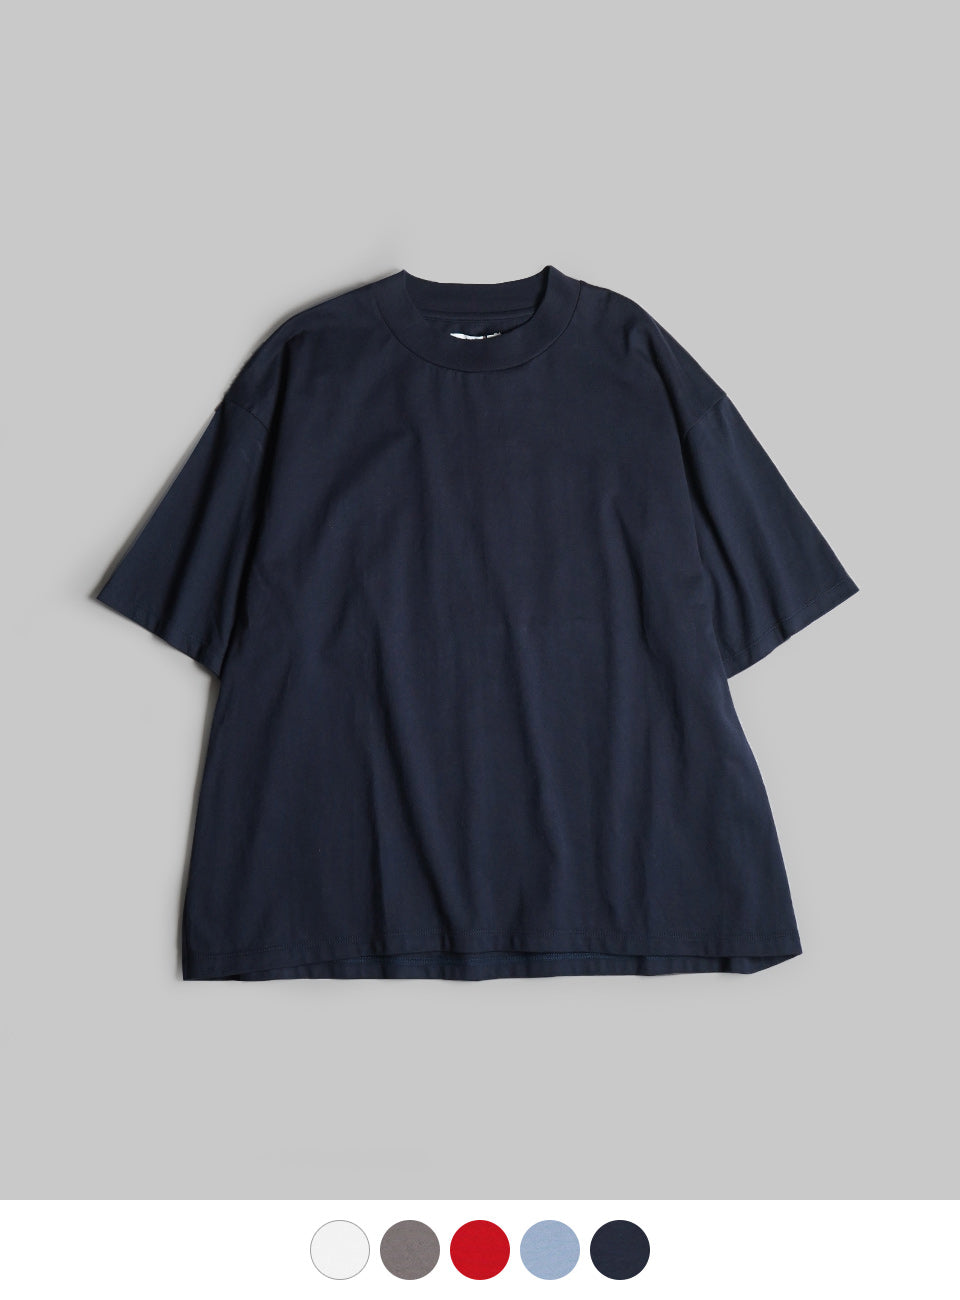 MANON マノン オーバーヨーク Tシャツ OVER YOKE TEE 半袖 カットソー プルオーバー MNN-C-133